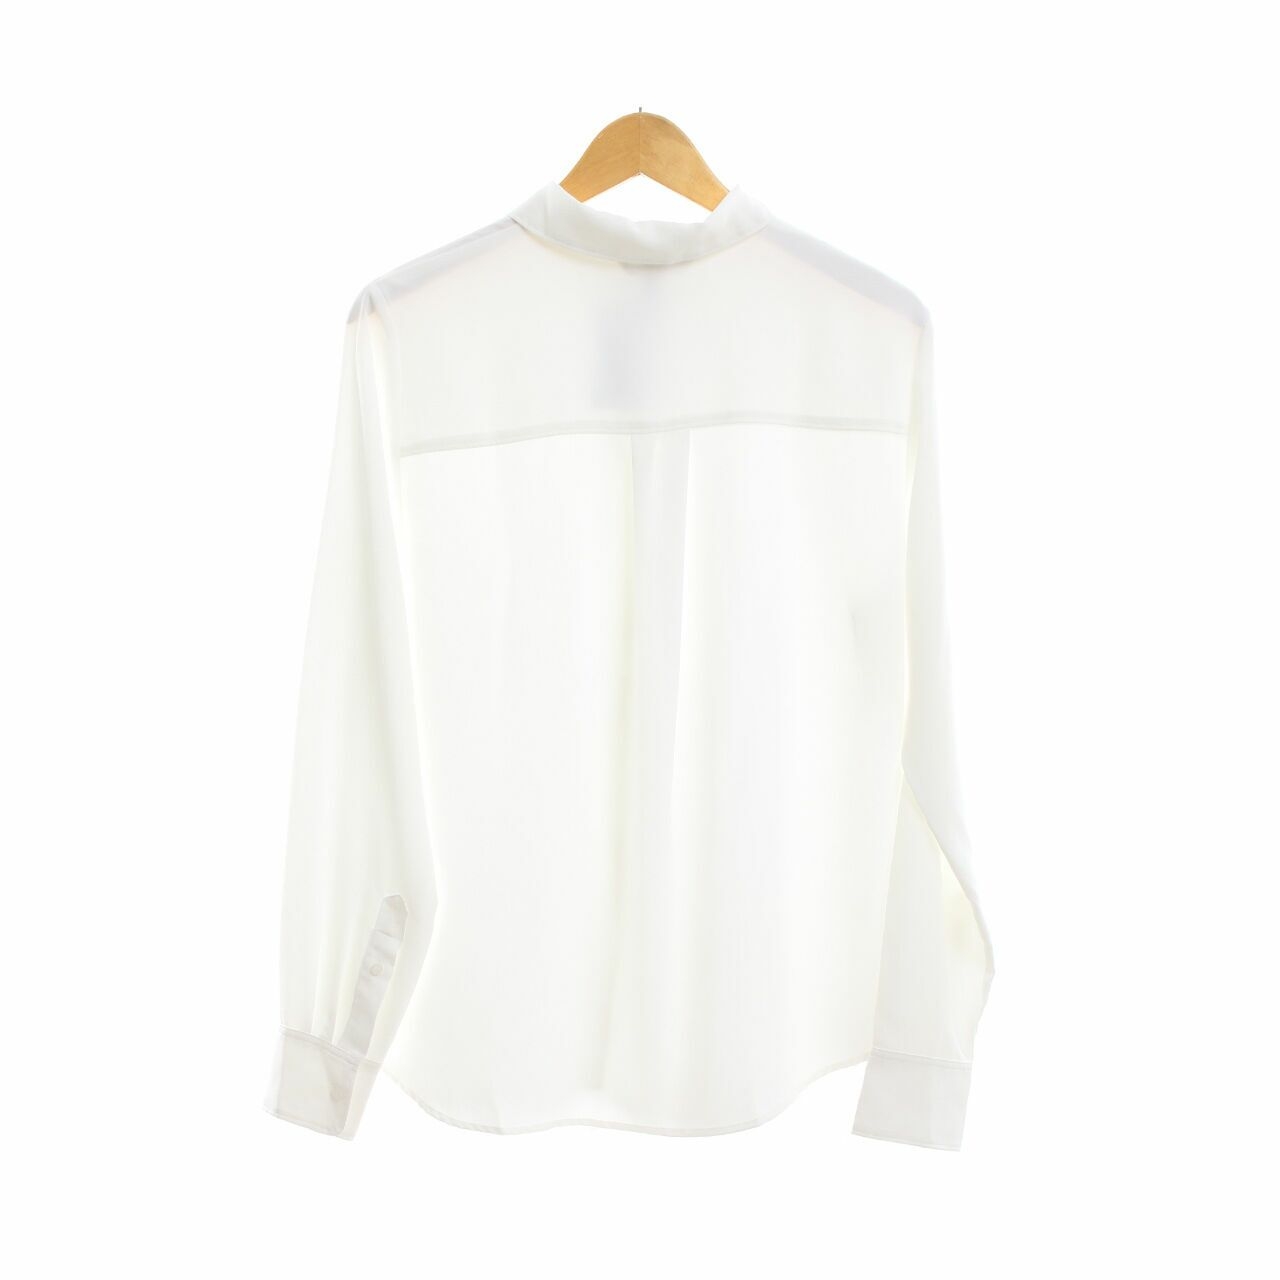 H&M Broken White Long Sleeve Shirt